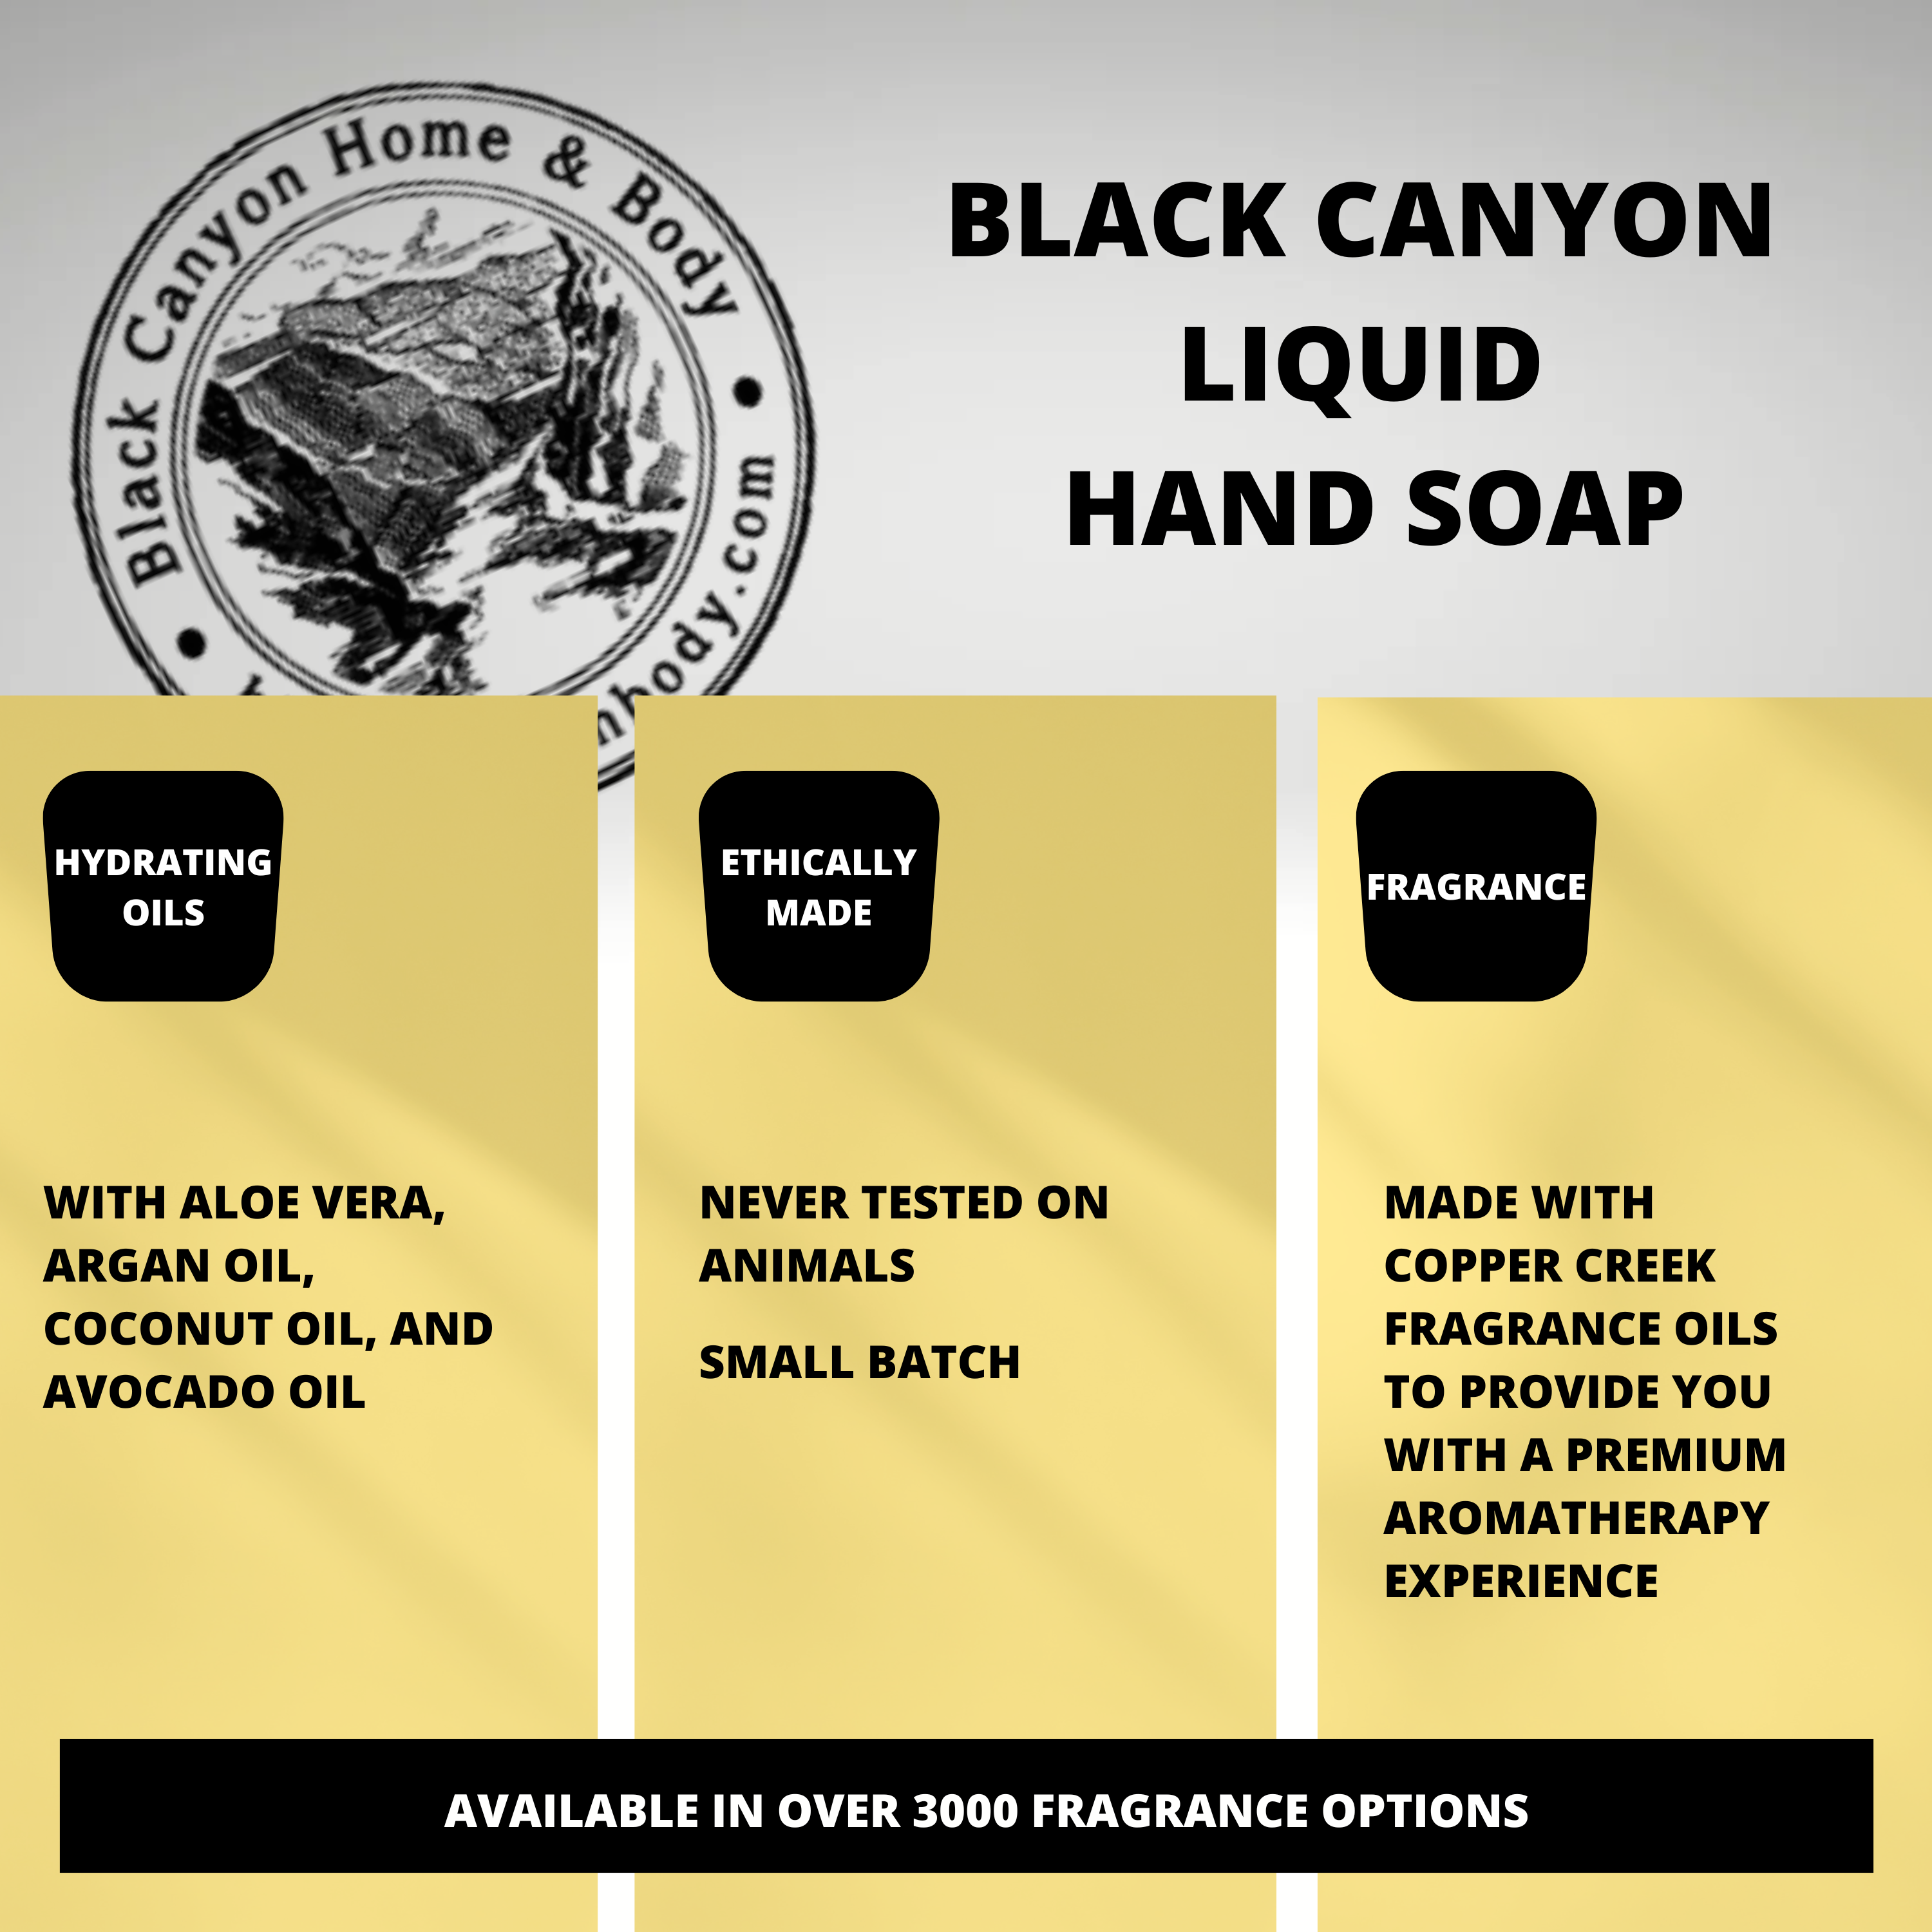 Black Canyon Bartlett Pear & Brandy Scented Liquid Hand Soap